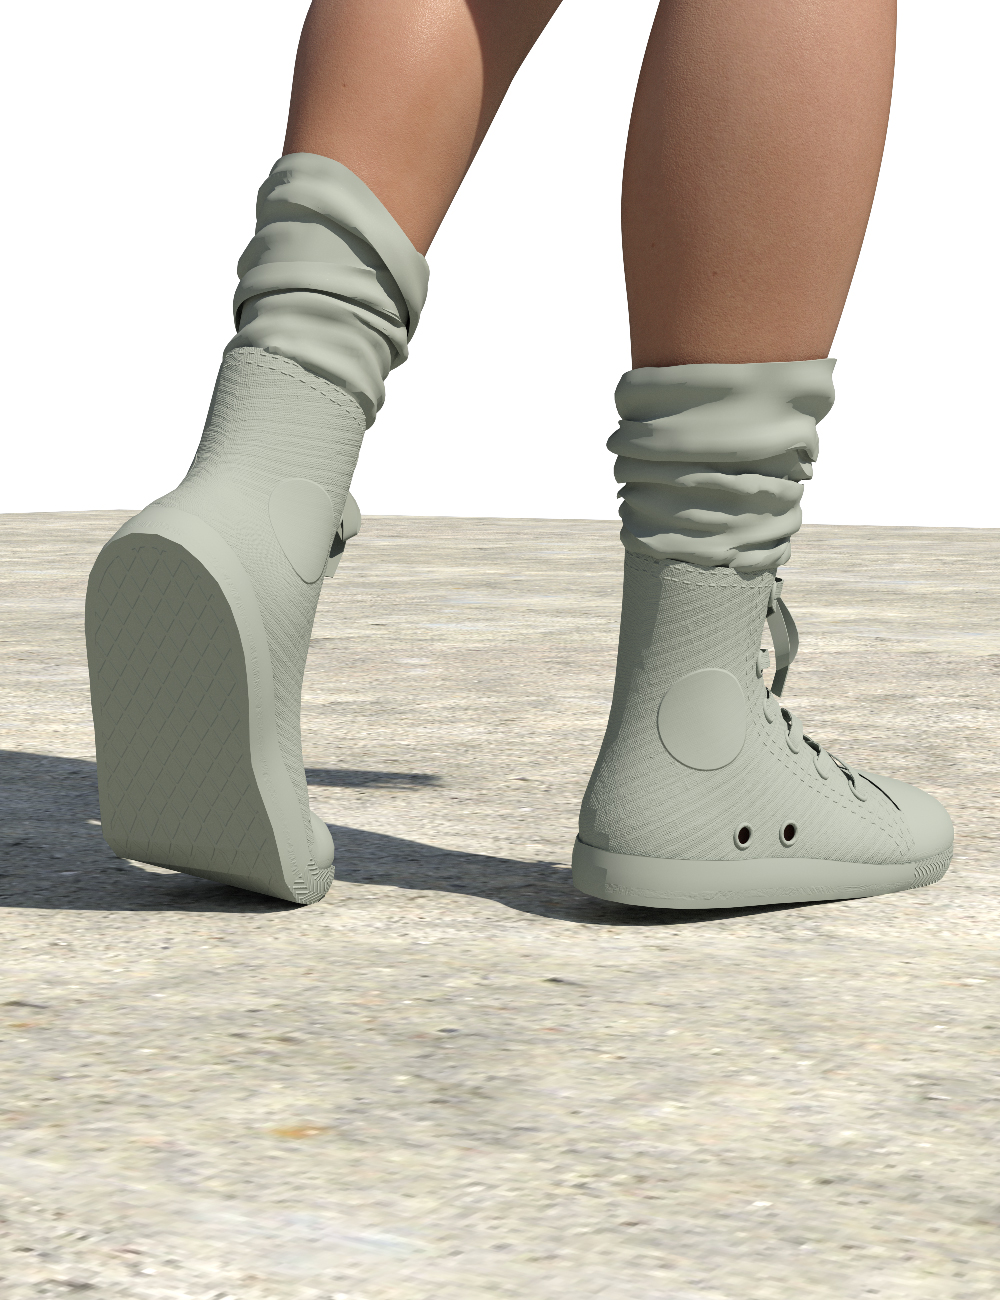 Hightop Chucks Sneakers by: DarkEdgeDesign, 3D Models by Daz 3D